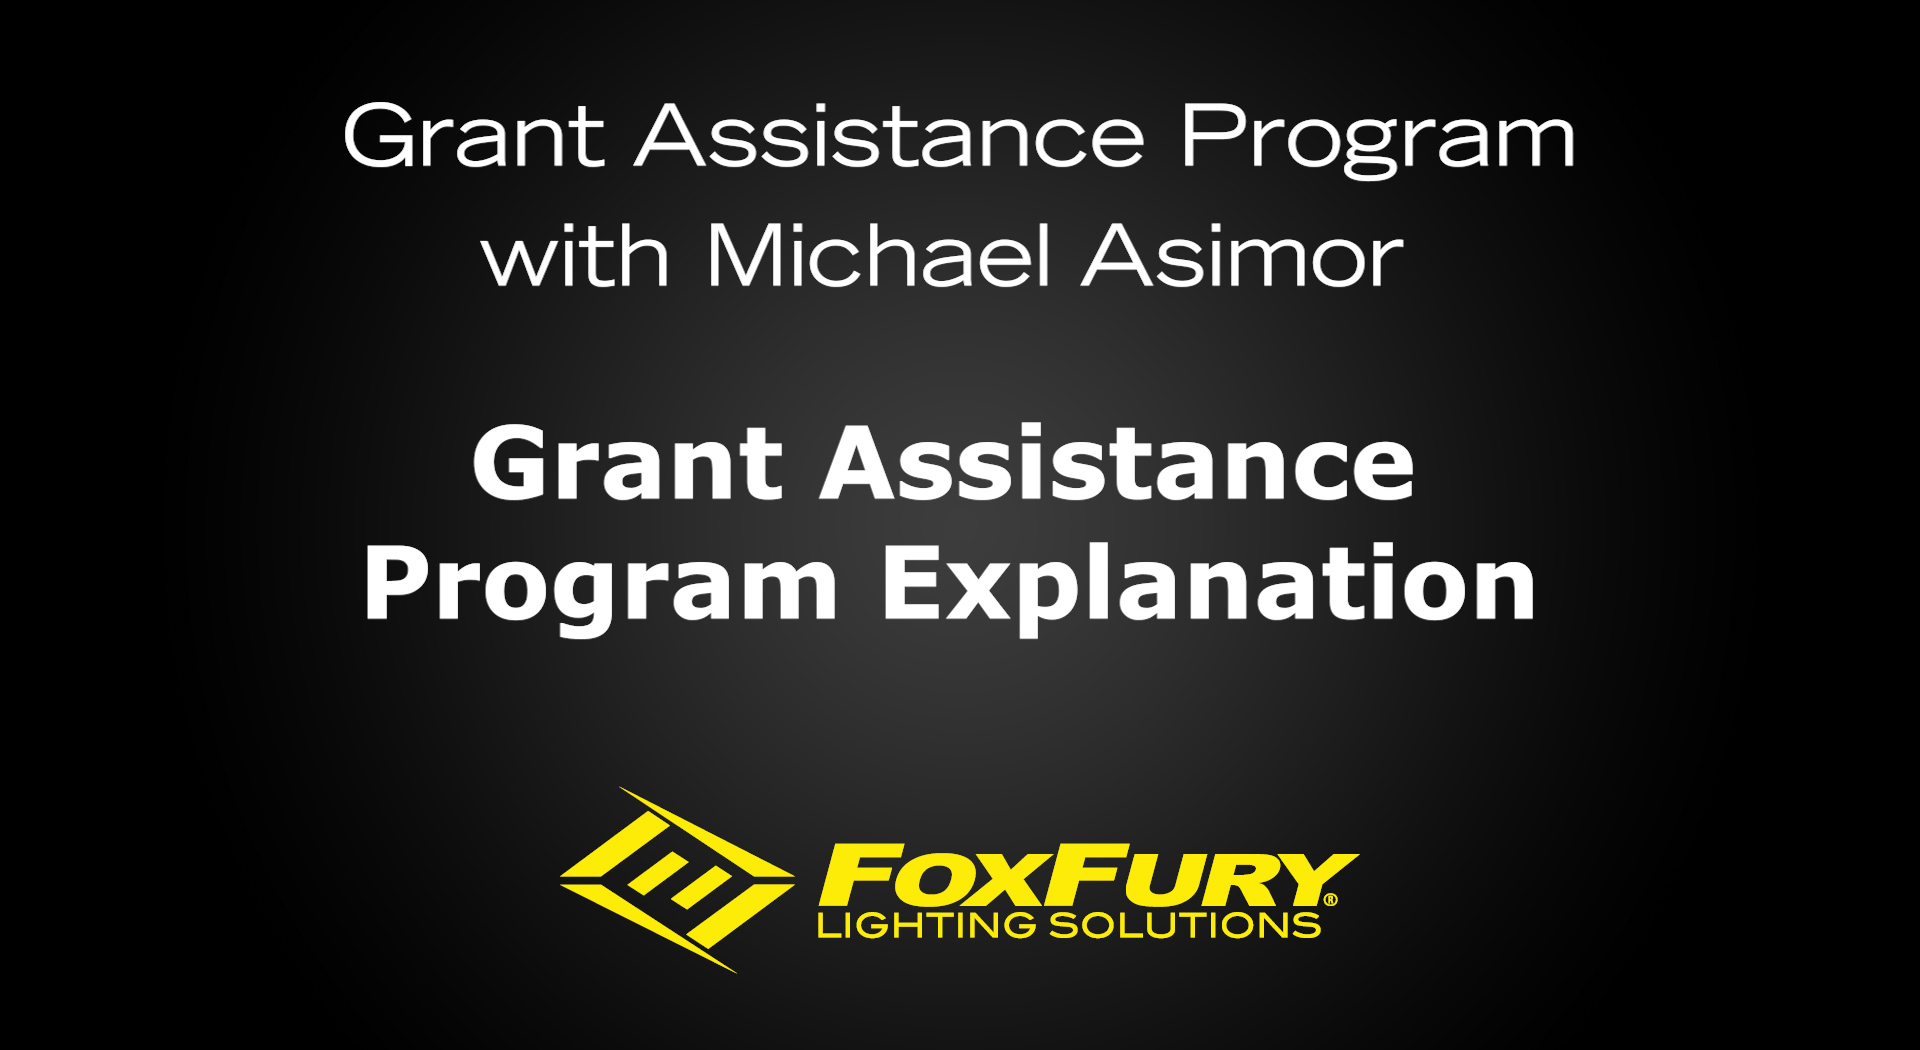 Grant Assistance Program Explanation video